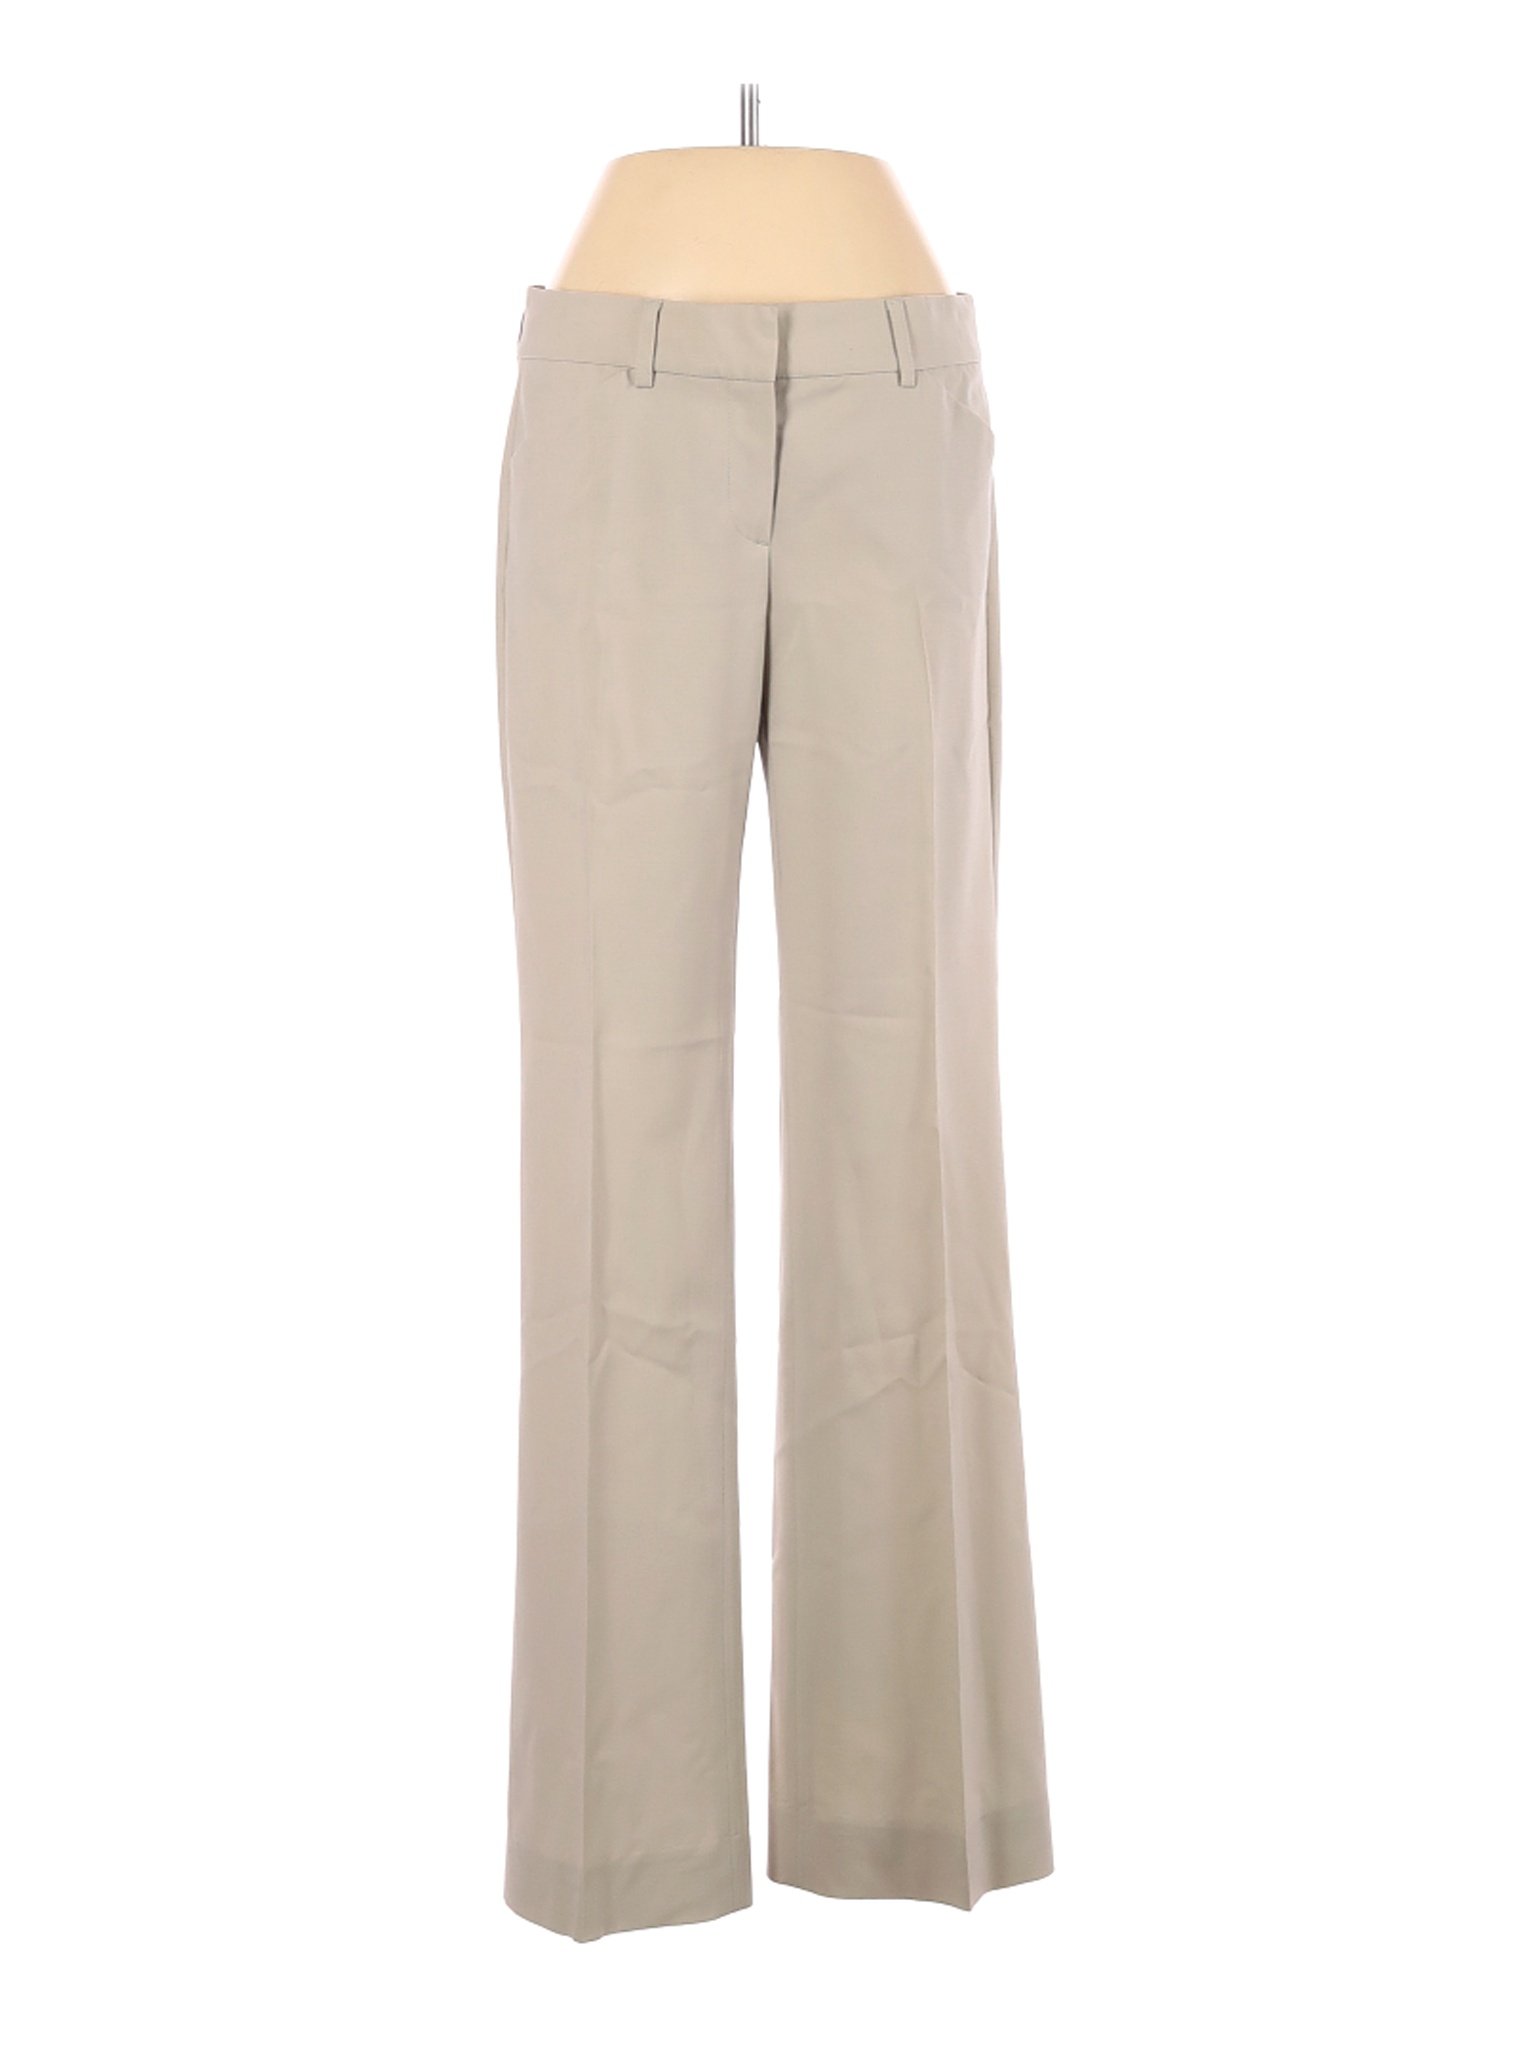 Theory Women Brown Wool Pants 2 | eBay